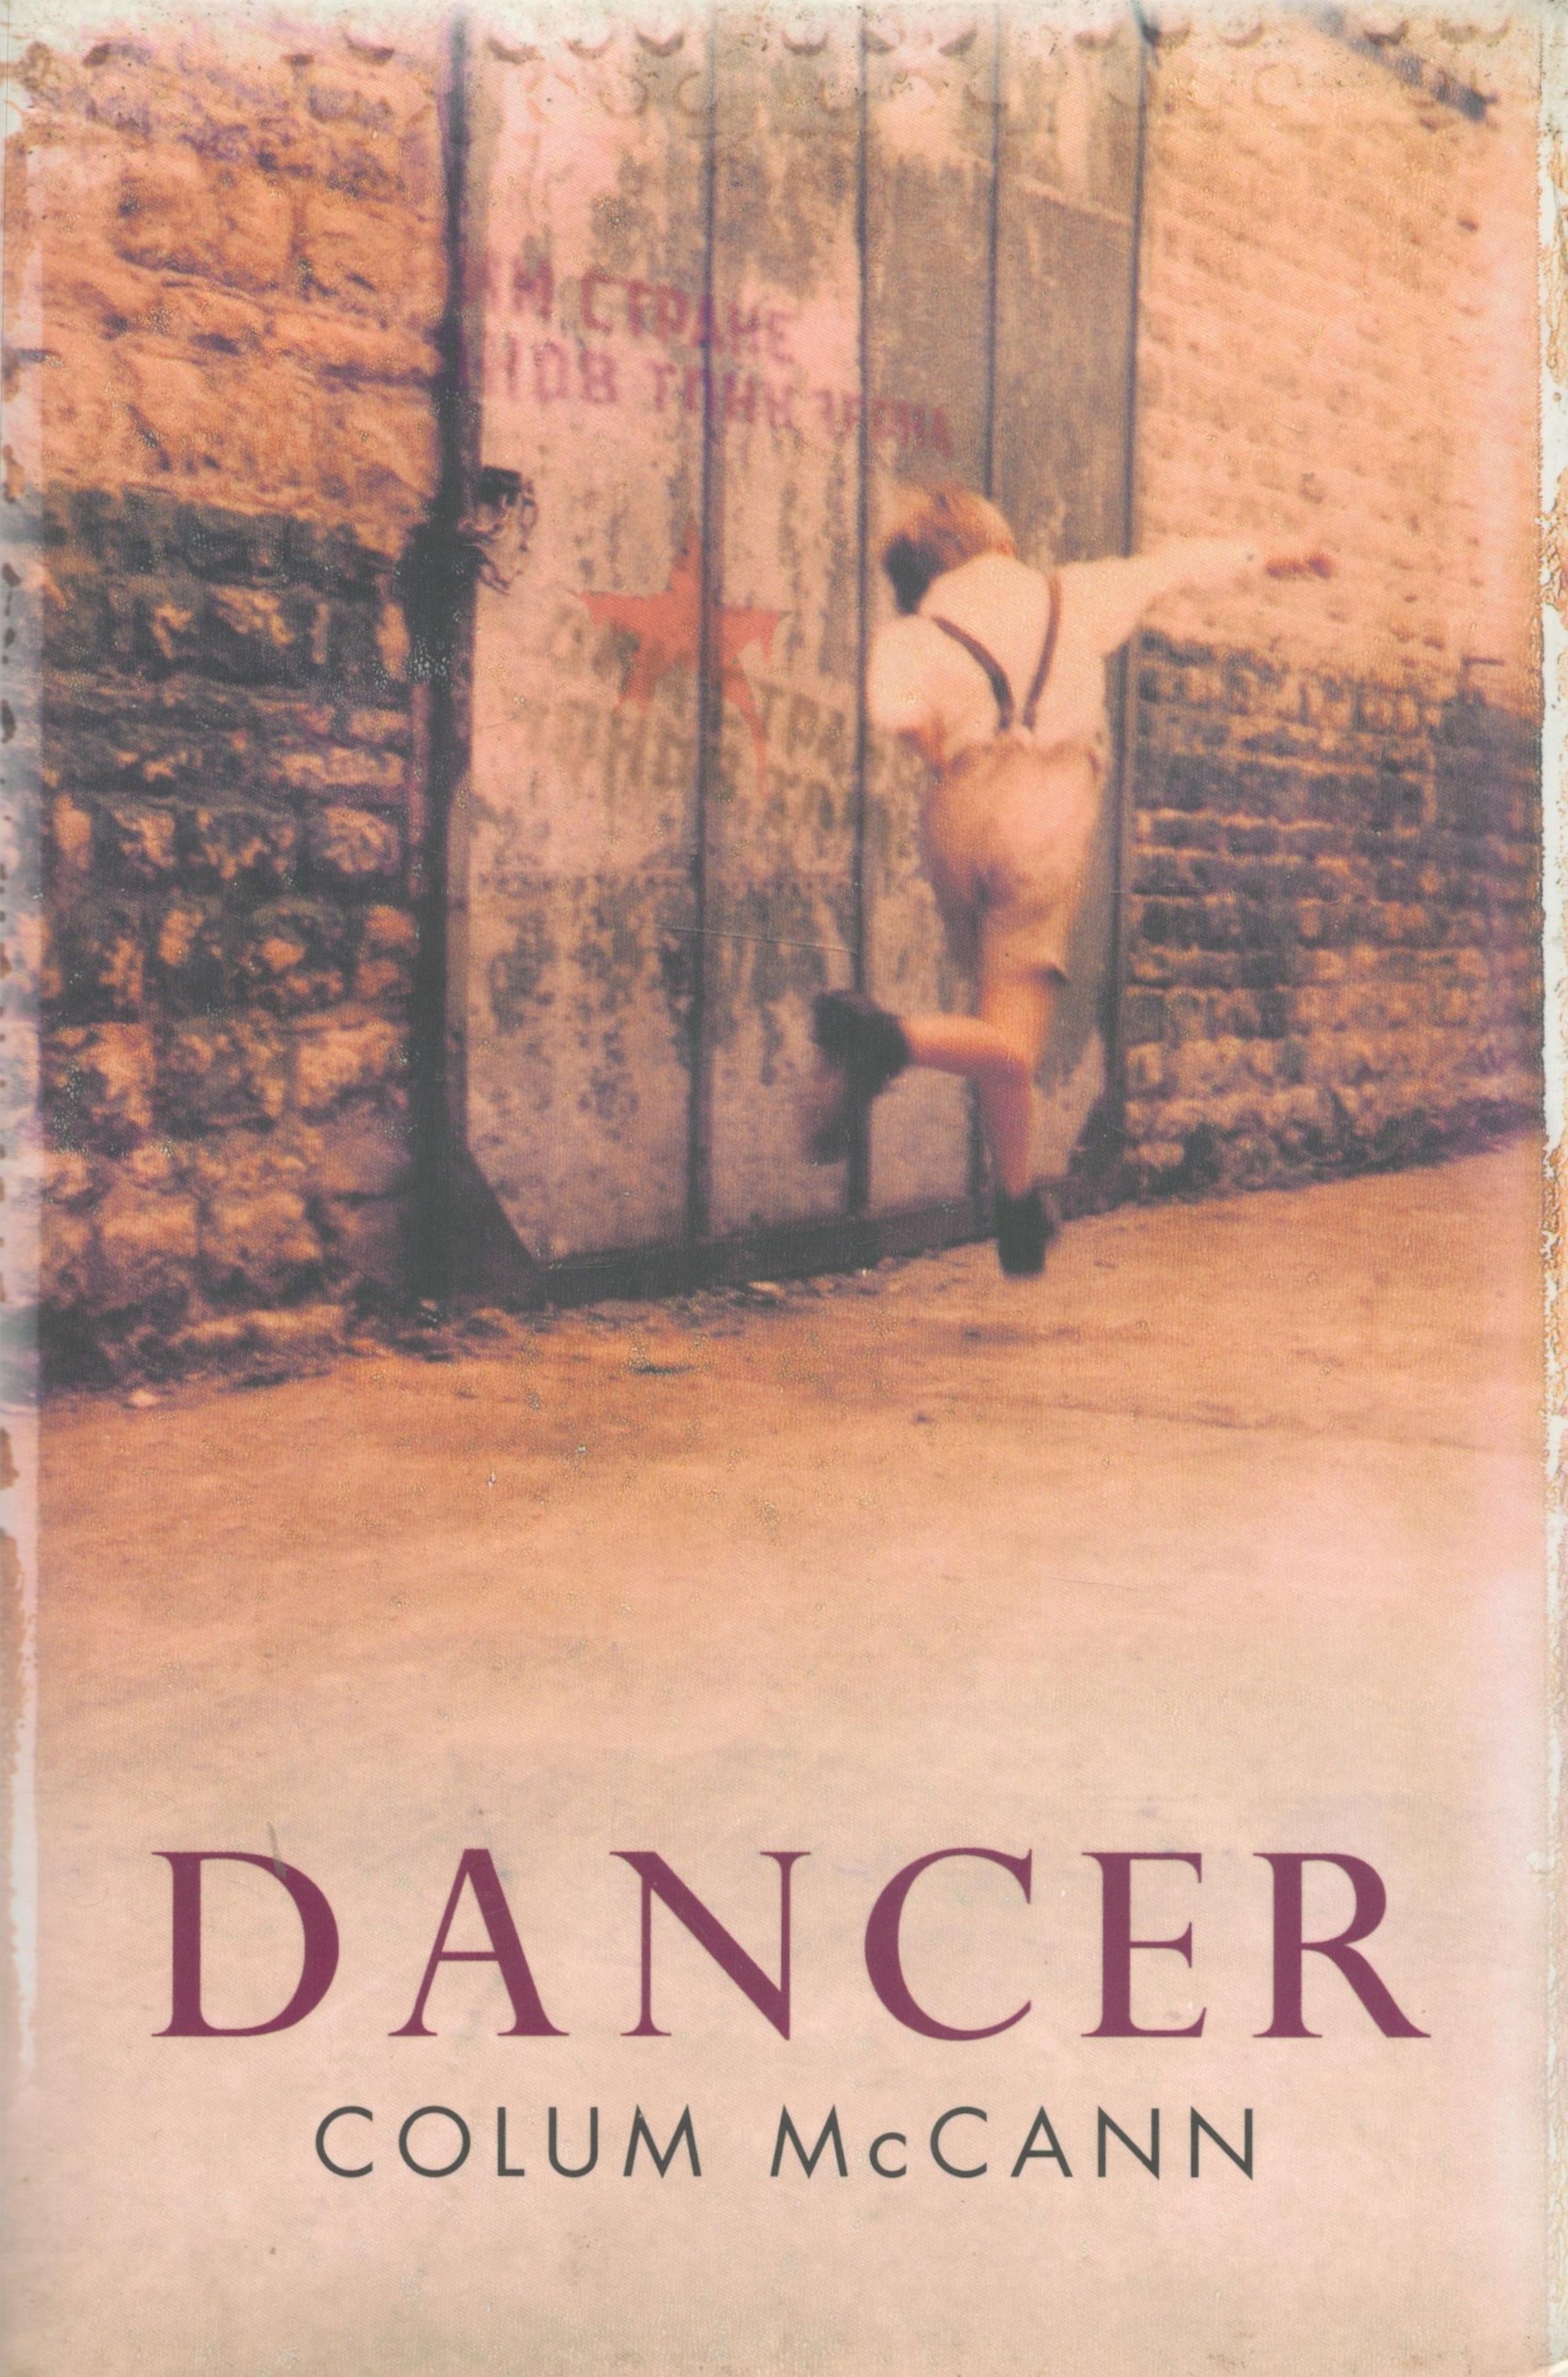 Dancer a fictional depiction of the life of Rudolf Nureyev by Colum McCann unsigned hardback but